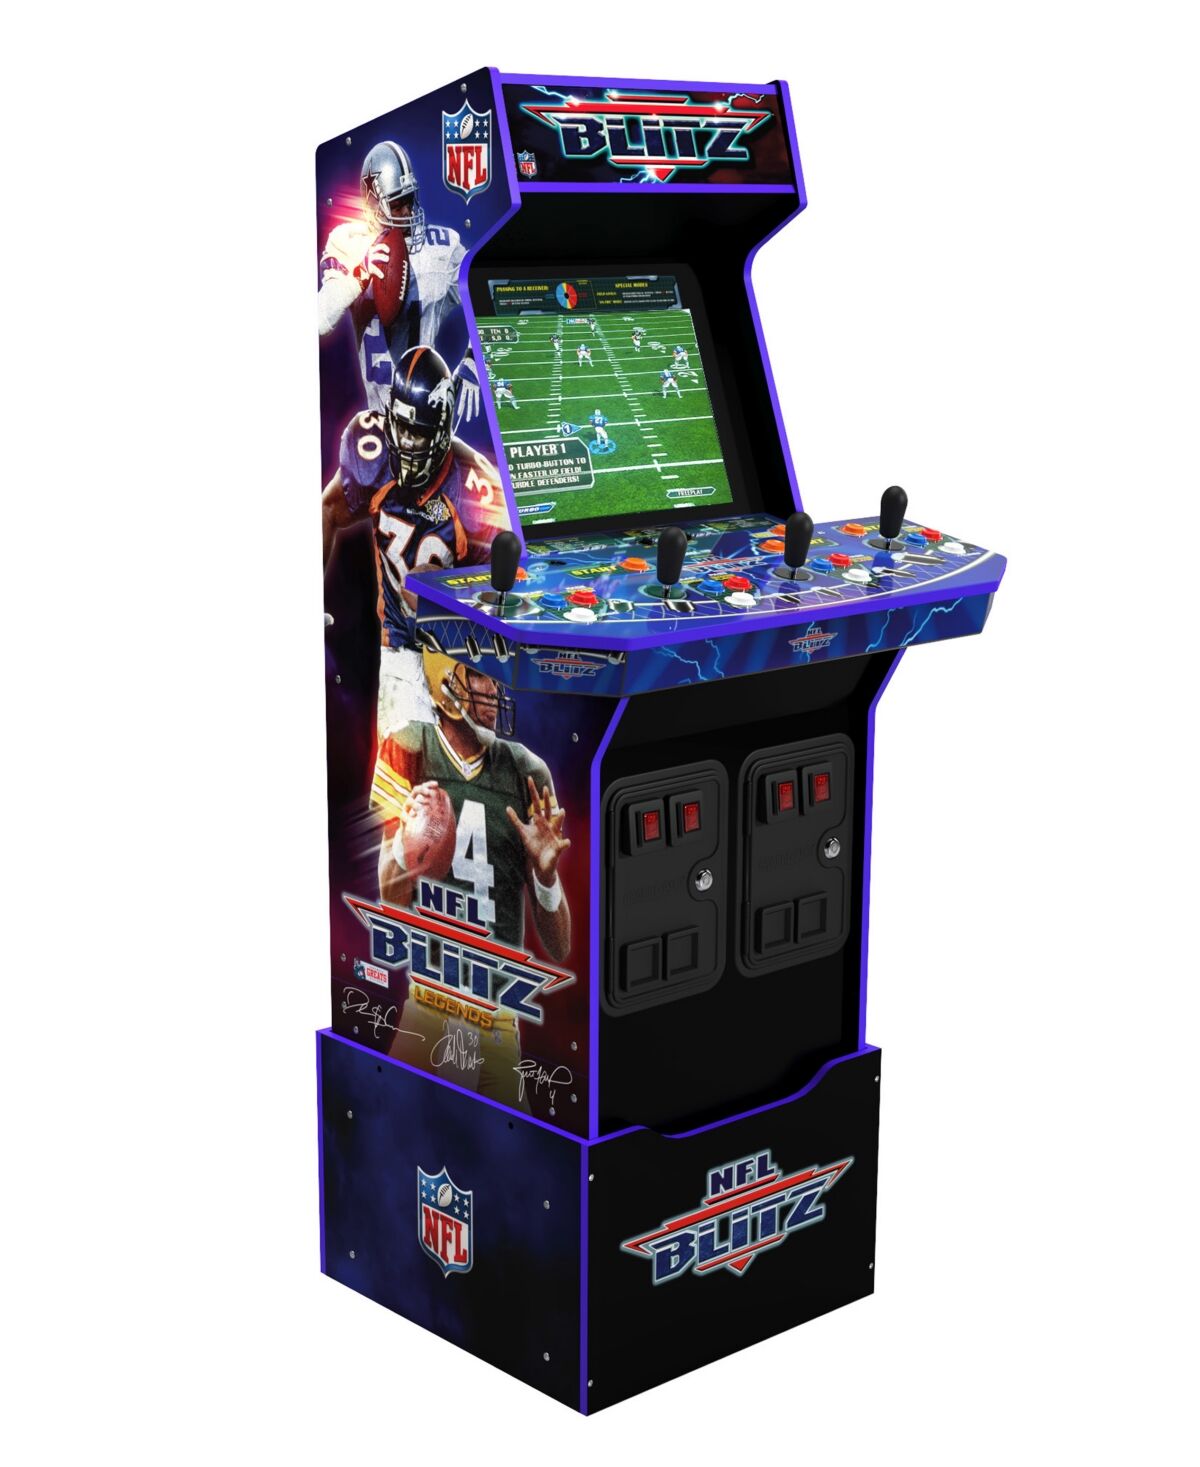 Arcade 1UP Nfl Blitz Arcade Video Game - Multi